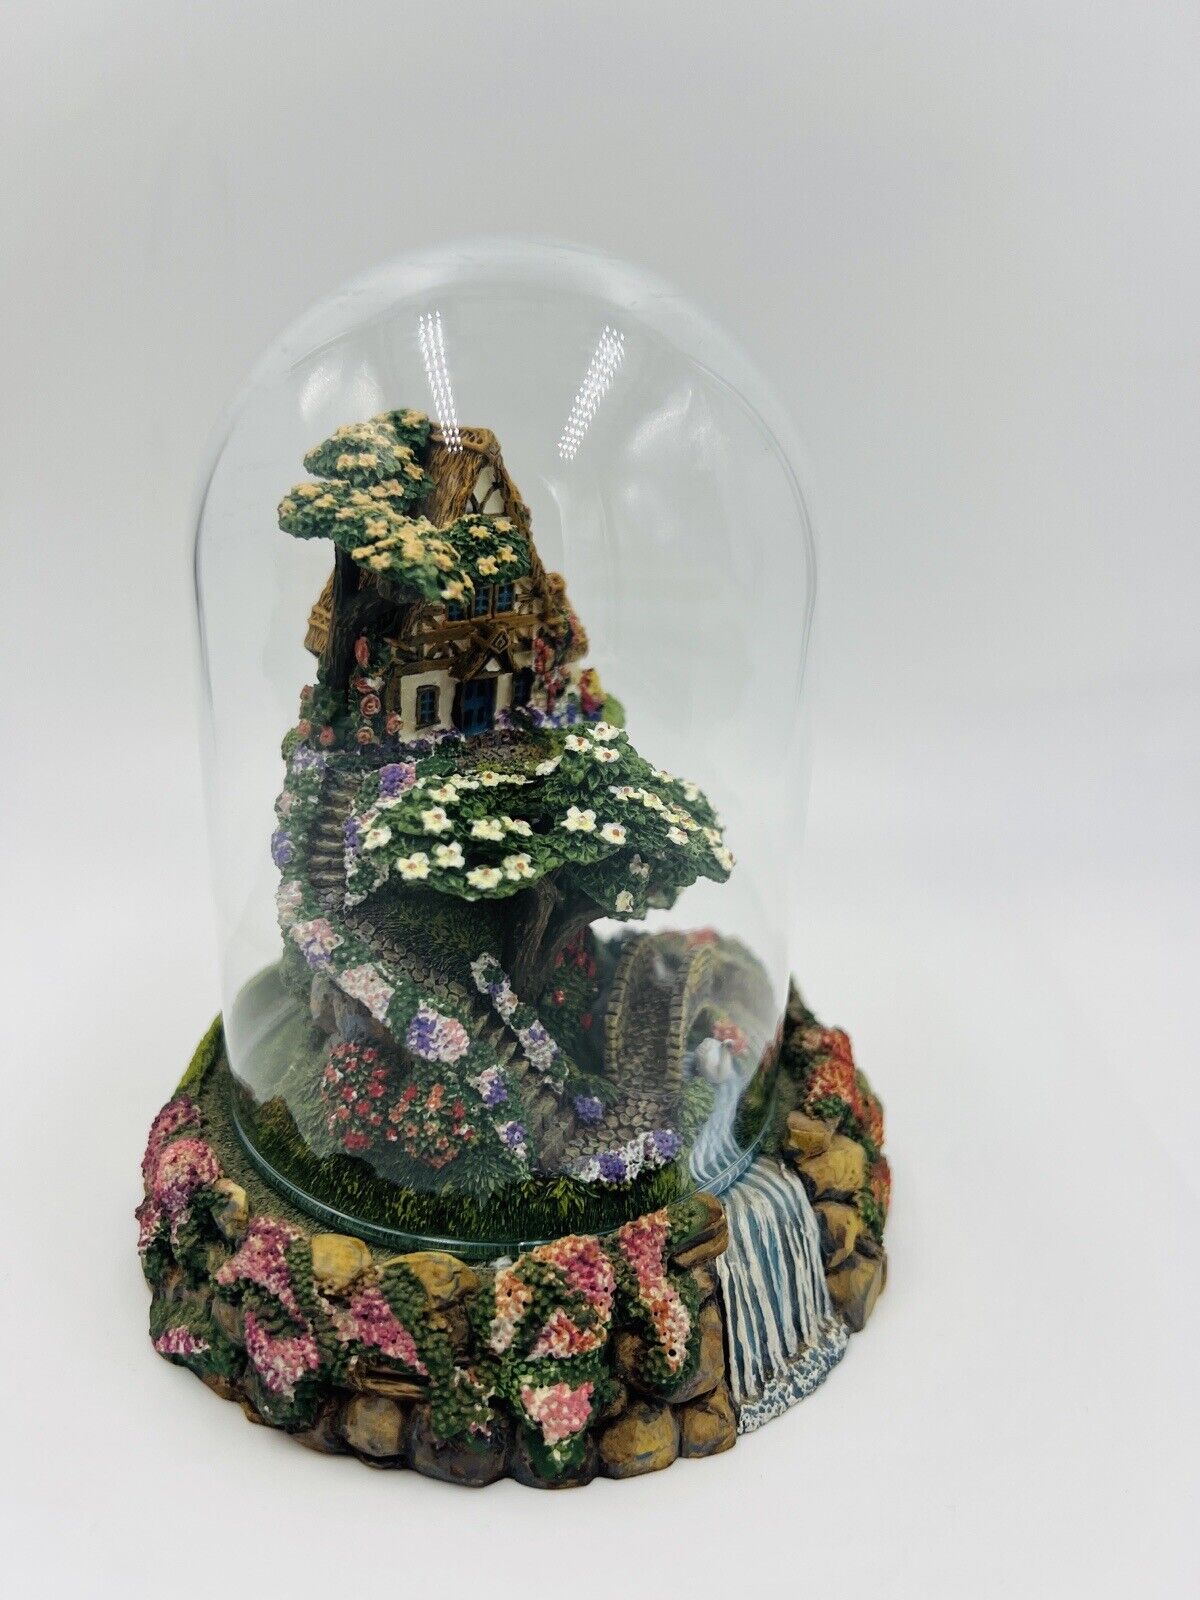 Franklin Mint Glass Dome Figurine Cobblestone Bridge Cottage Hand-Painted Decor